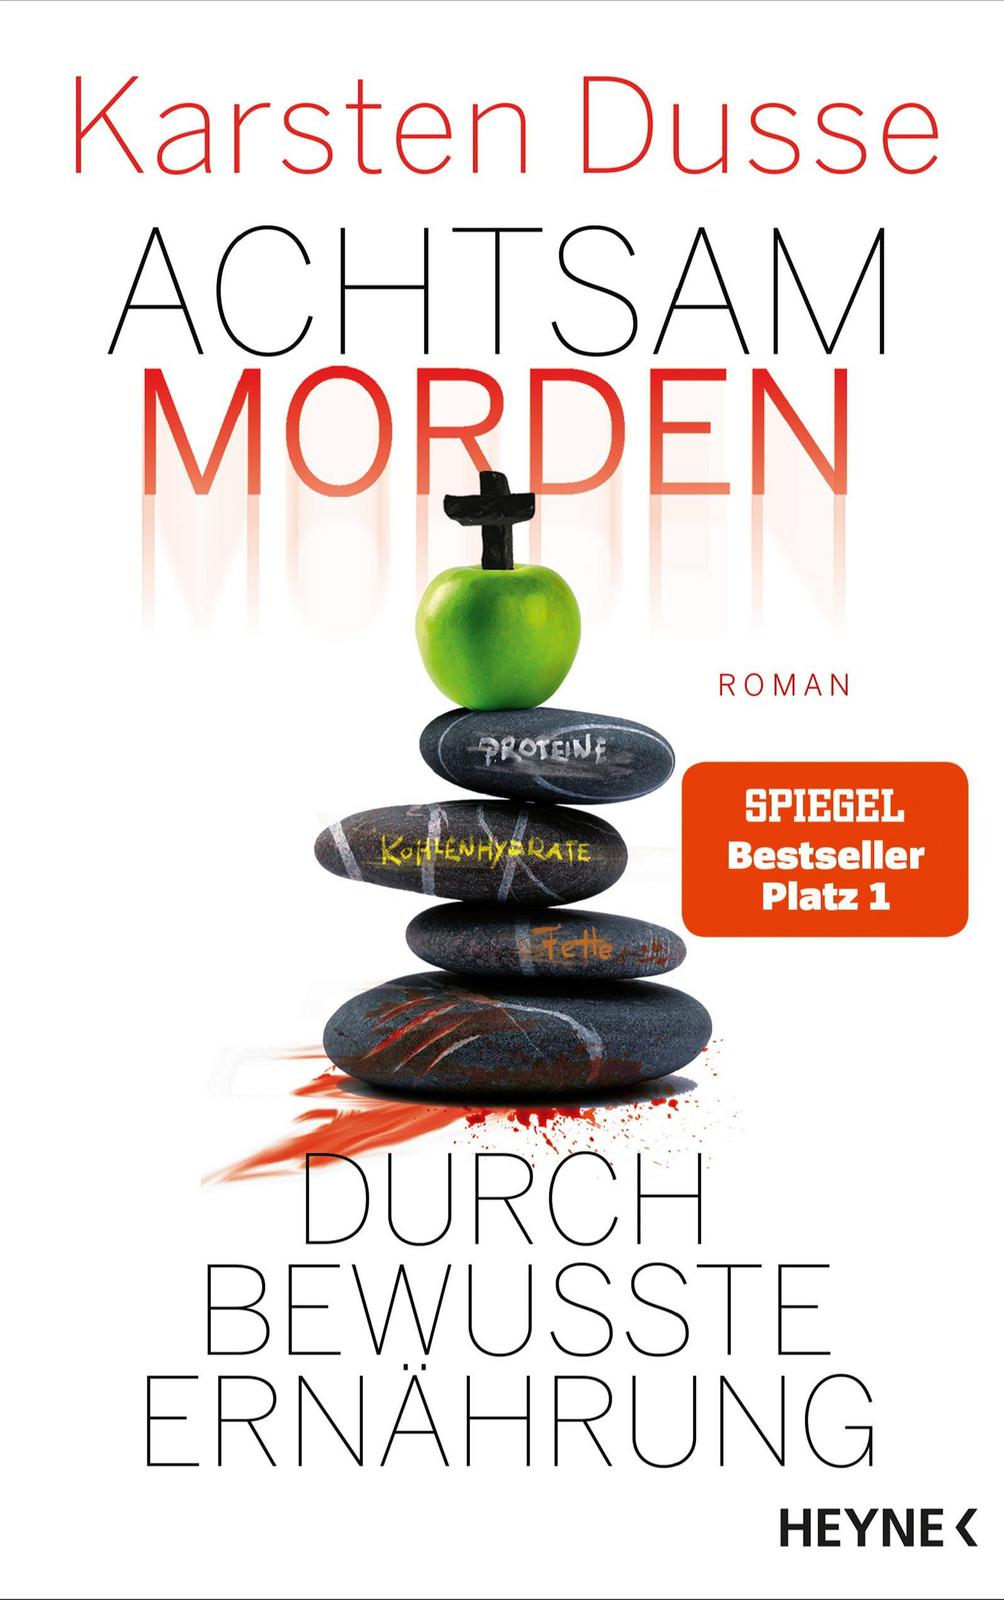 Karsten Dusse: Achtsam morden durch bewusste Ernährung (German language, 2024, Heyne Verlag)